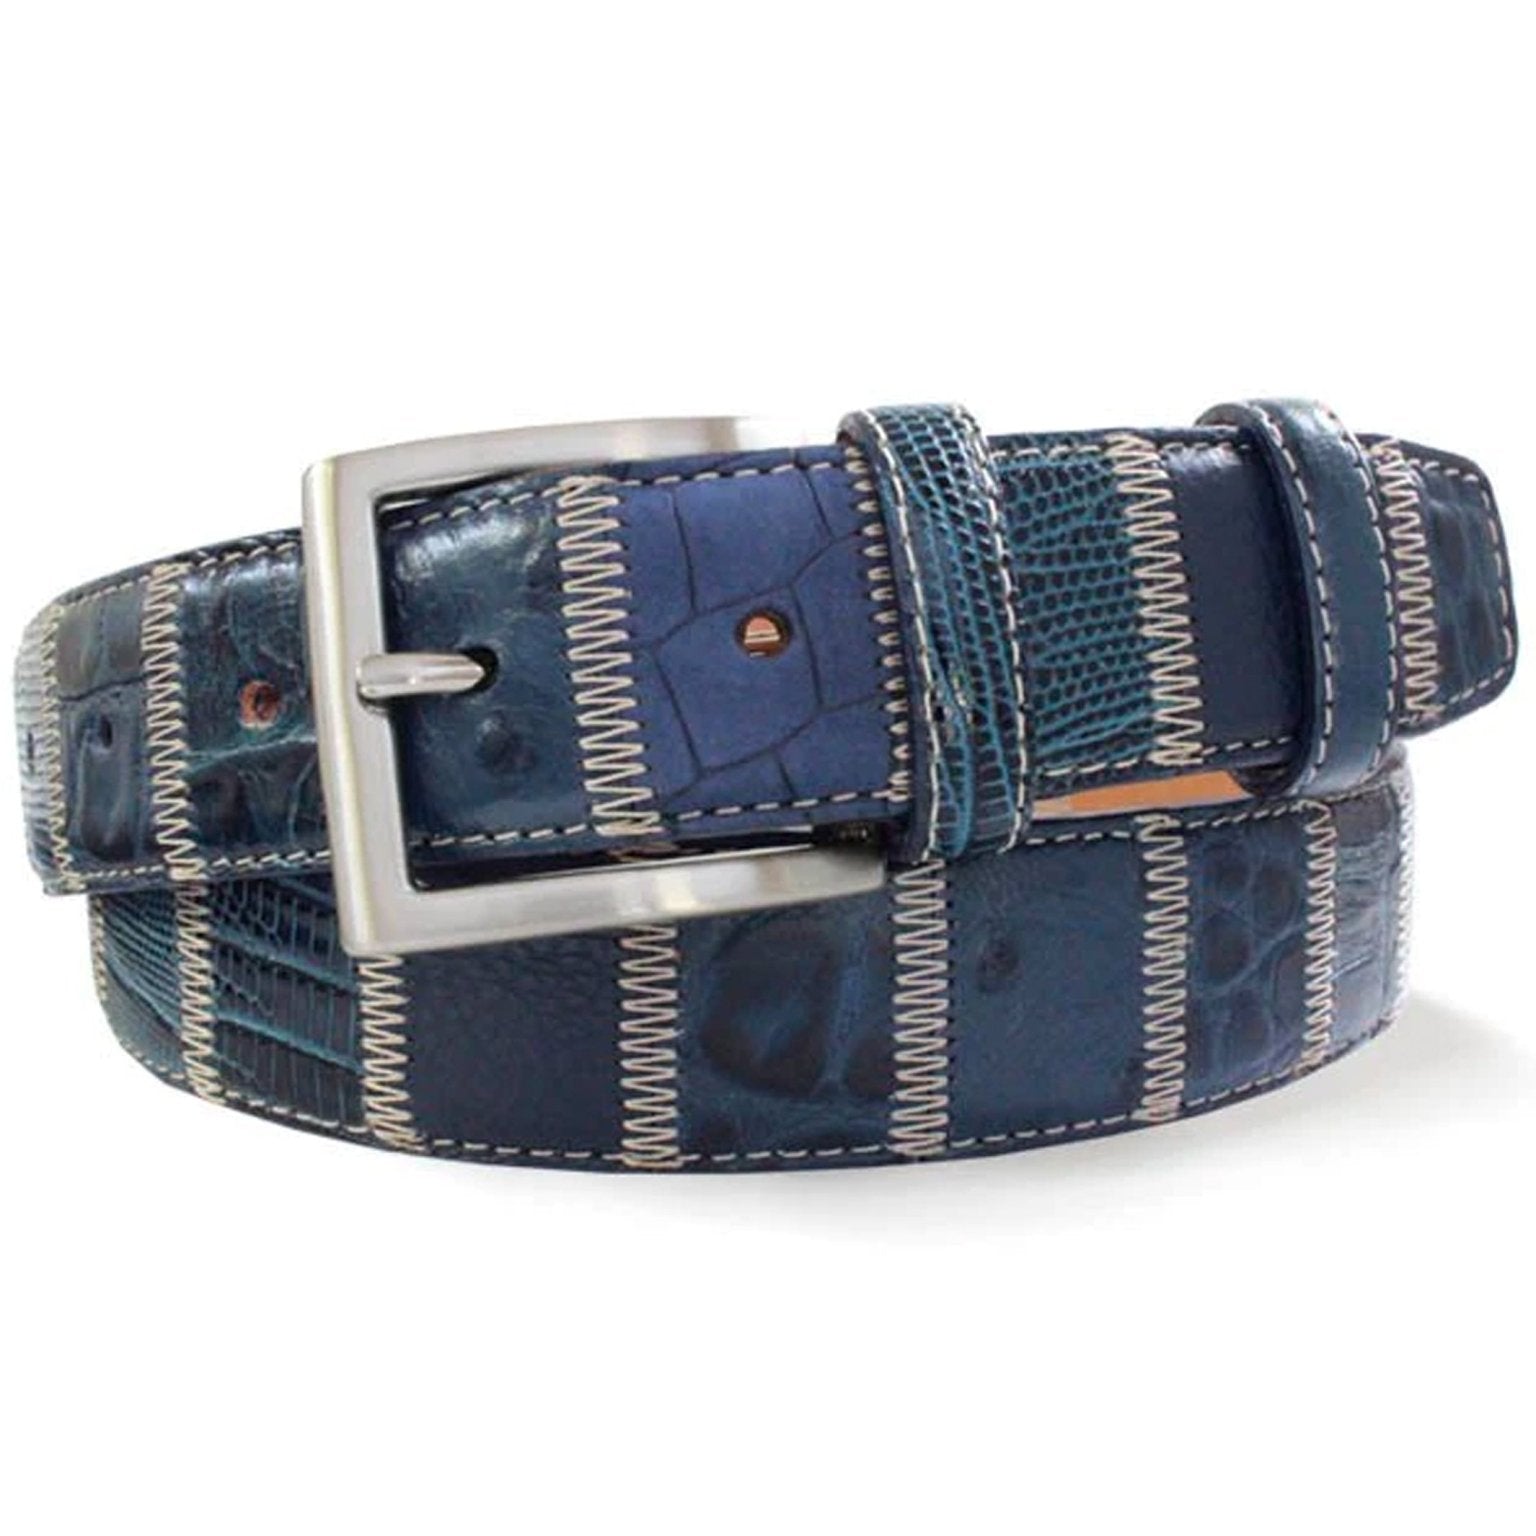 4elementsclothingRobert CharlesRobert Charles Belts - 1609 Patchwork Blue Mens Leather Belt 40mm - Made in Italy - 100% LeatherBelts1609/40/S